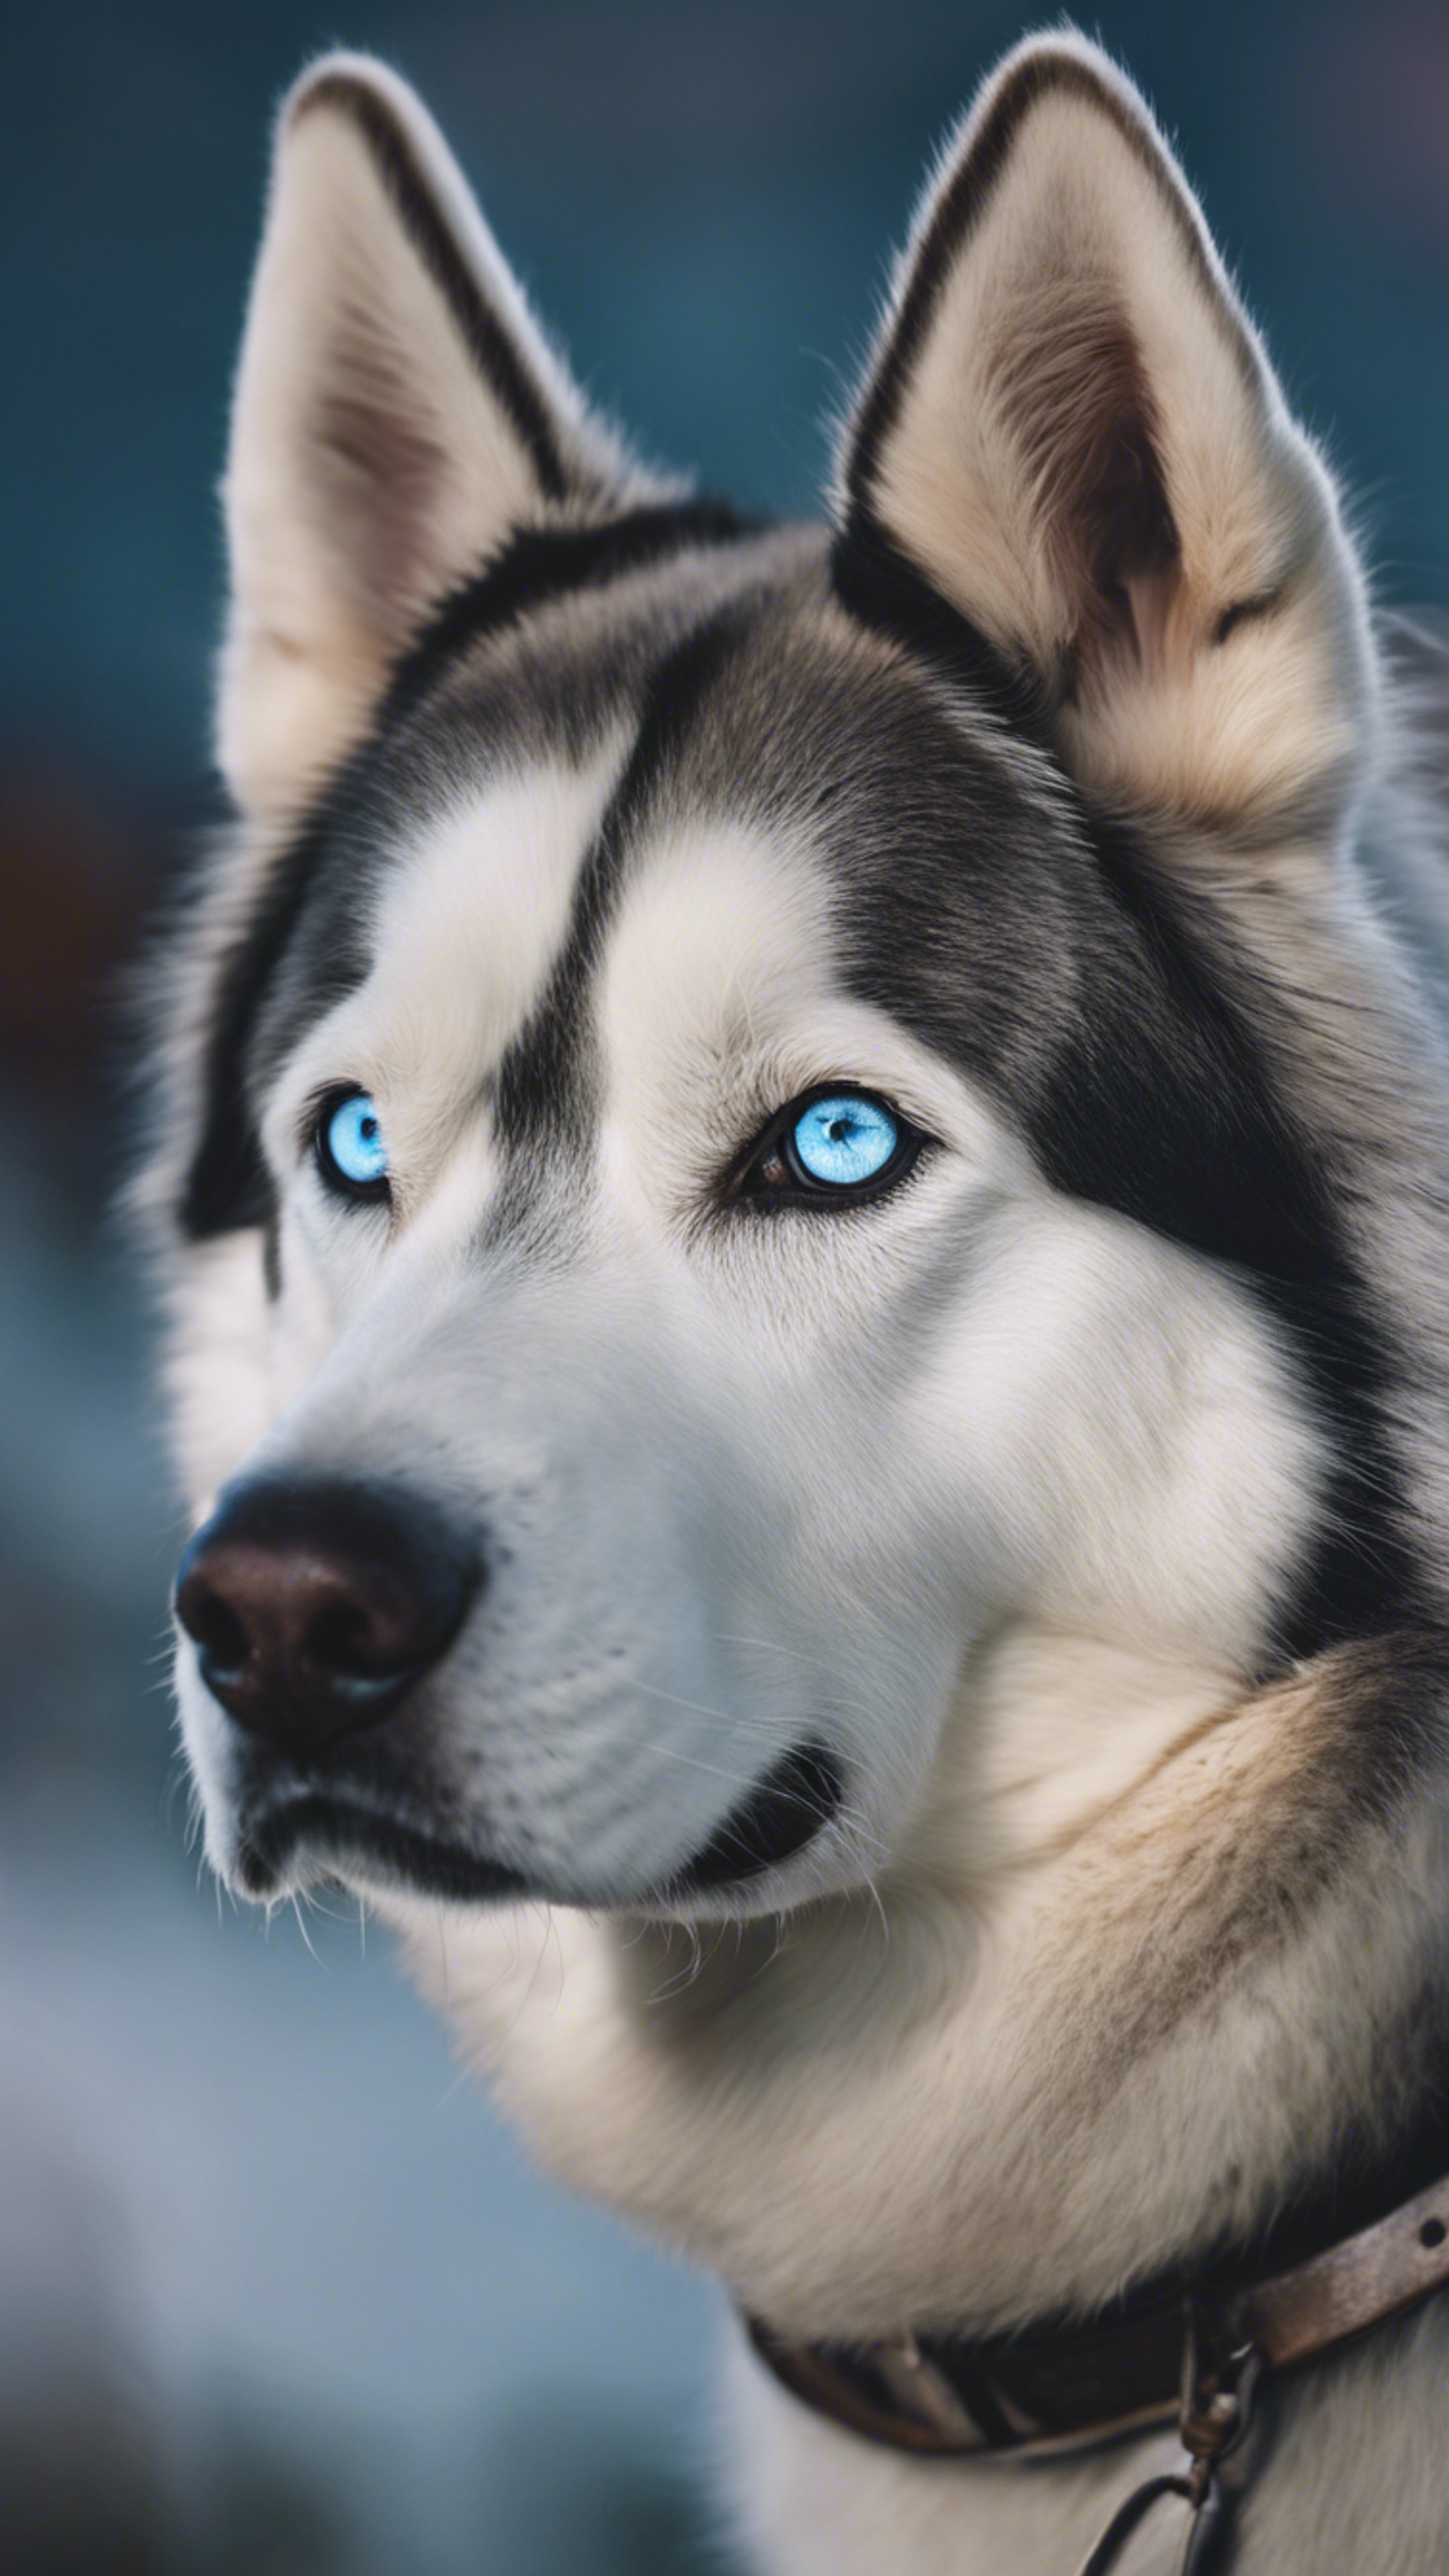 An intricate portrait of an elderly husky dog with steel blue eyes, illuminated by a soft evening light.壁紙[26f13a9f4a4a4bab9b9f]